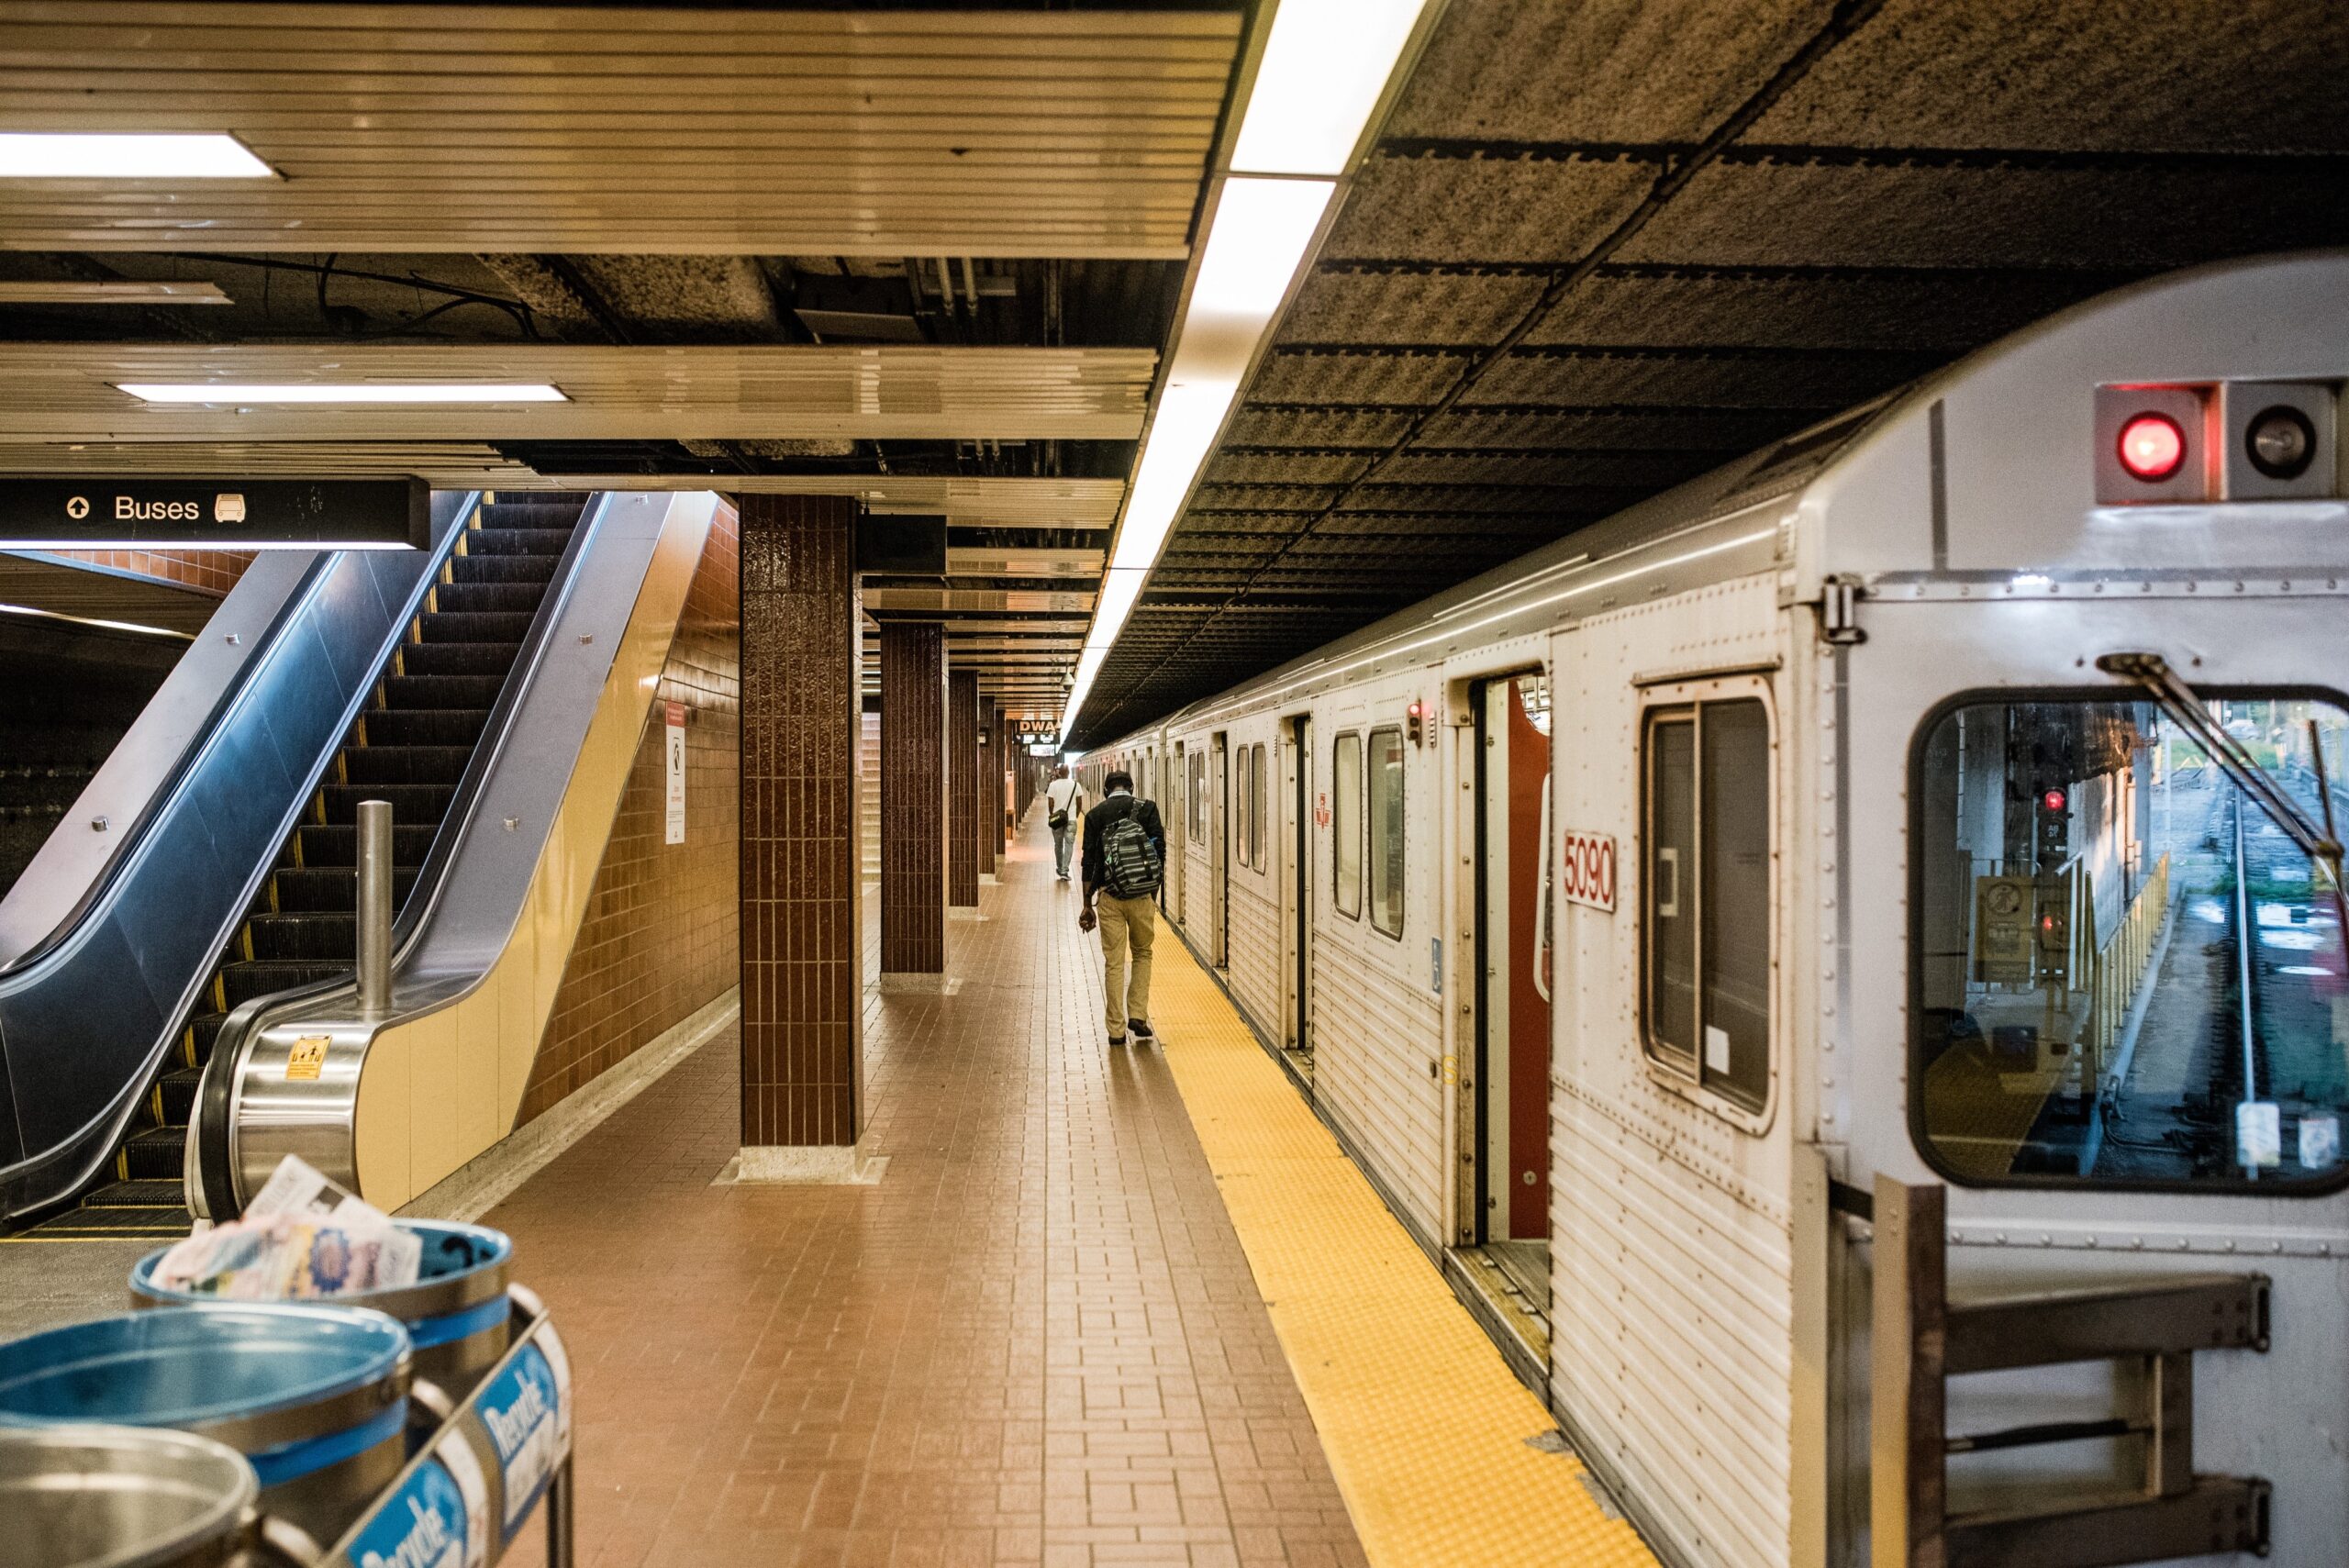 subway training arrives at platform